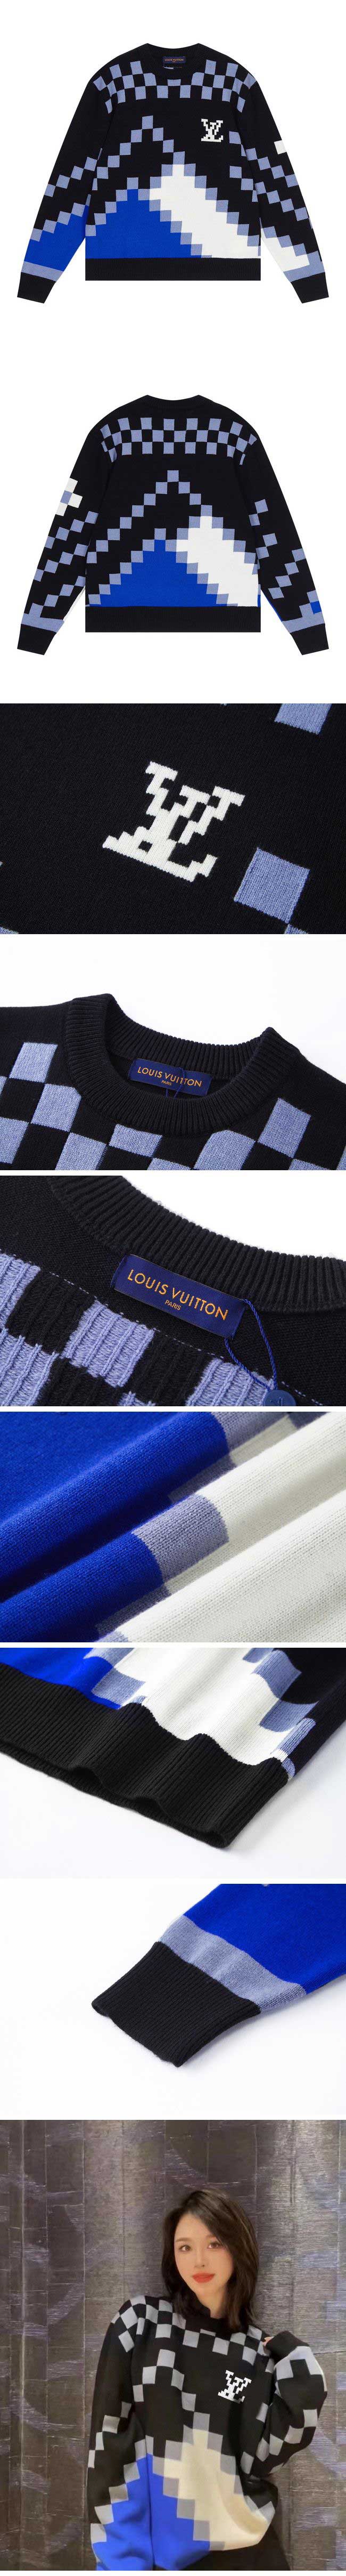 Louis Vuitton Block Design Sweater ルイヴィトン ブロック デザイン セーター